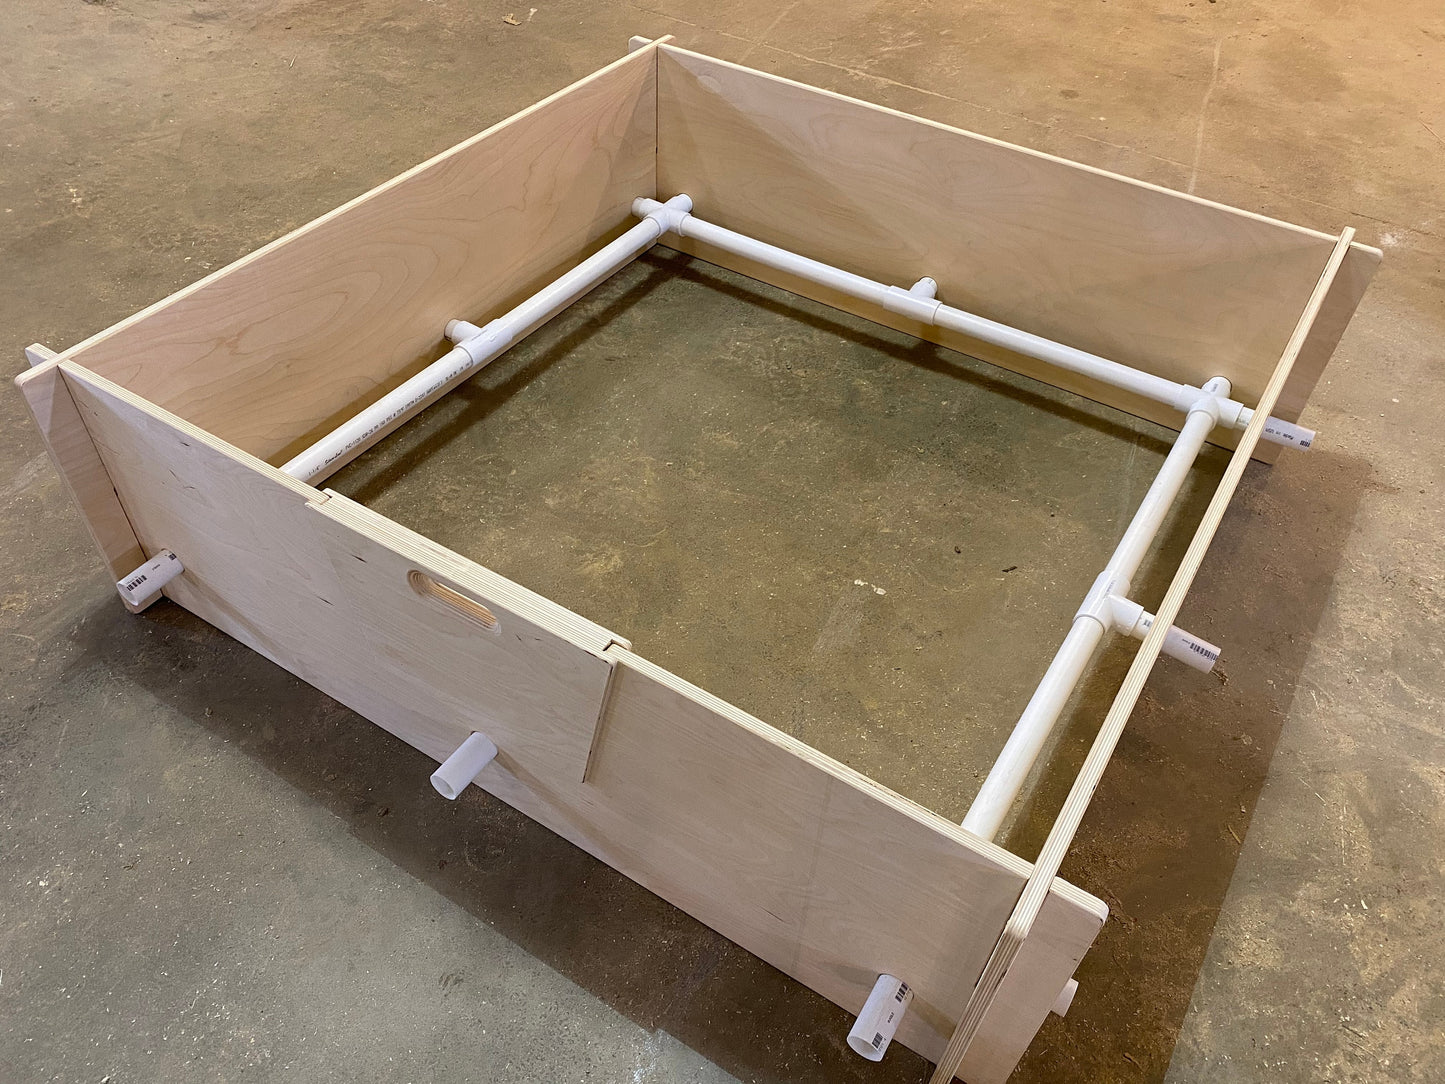 Slide assembly dog whelping box / birthing bed